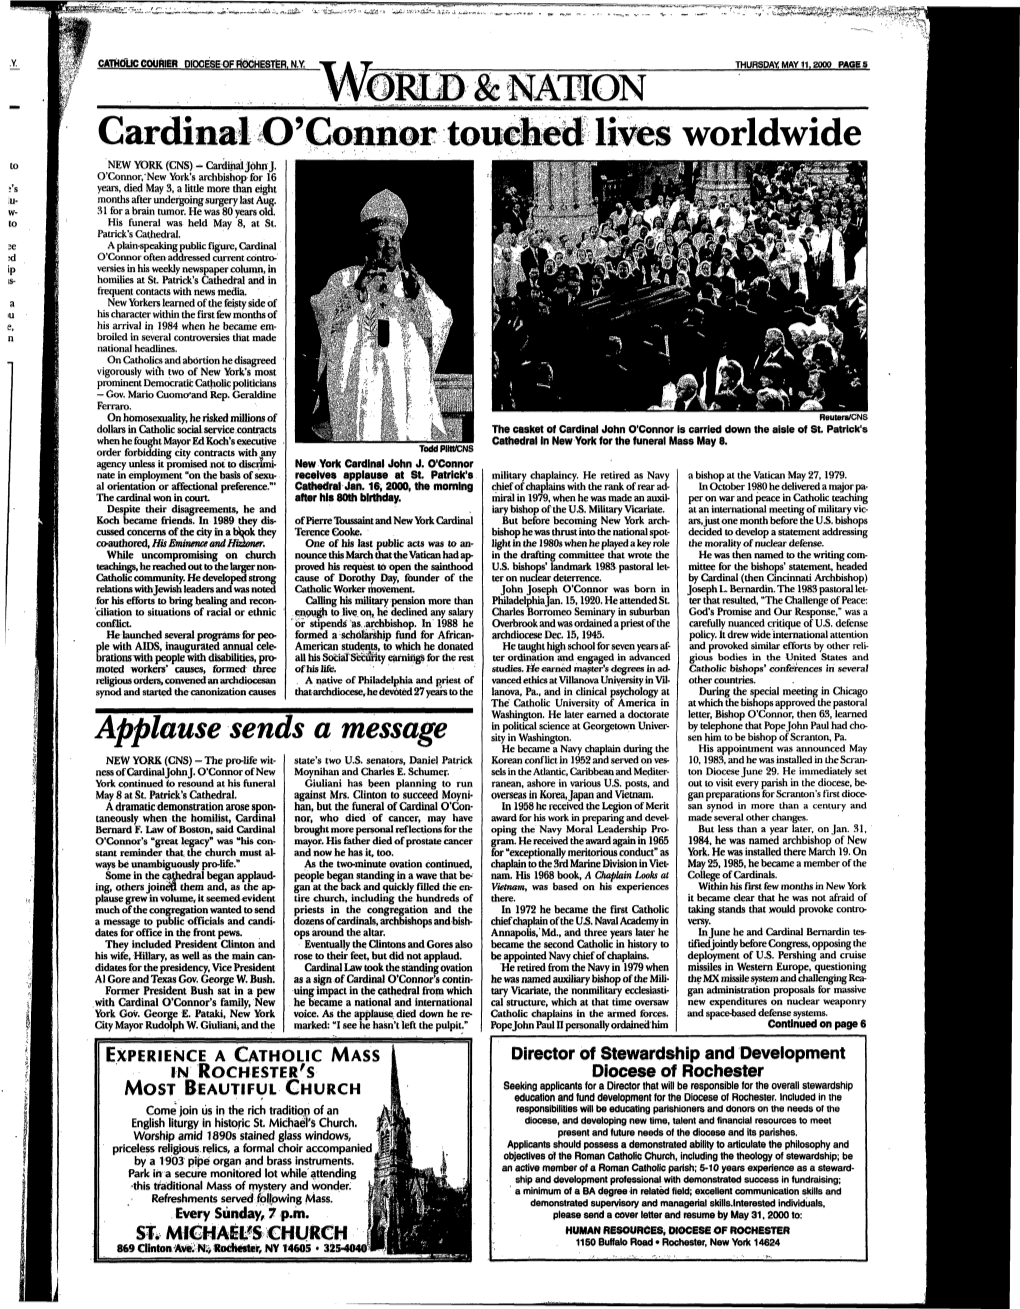 Cardinal O'connor Touched Lives Worldwide NEW YORK (CNS) - Cardihal John J